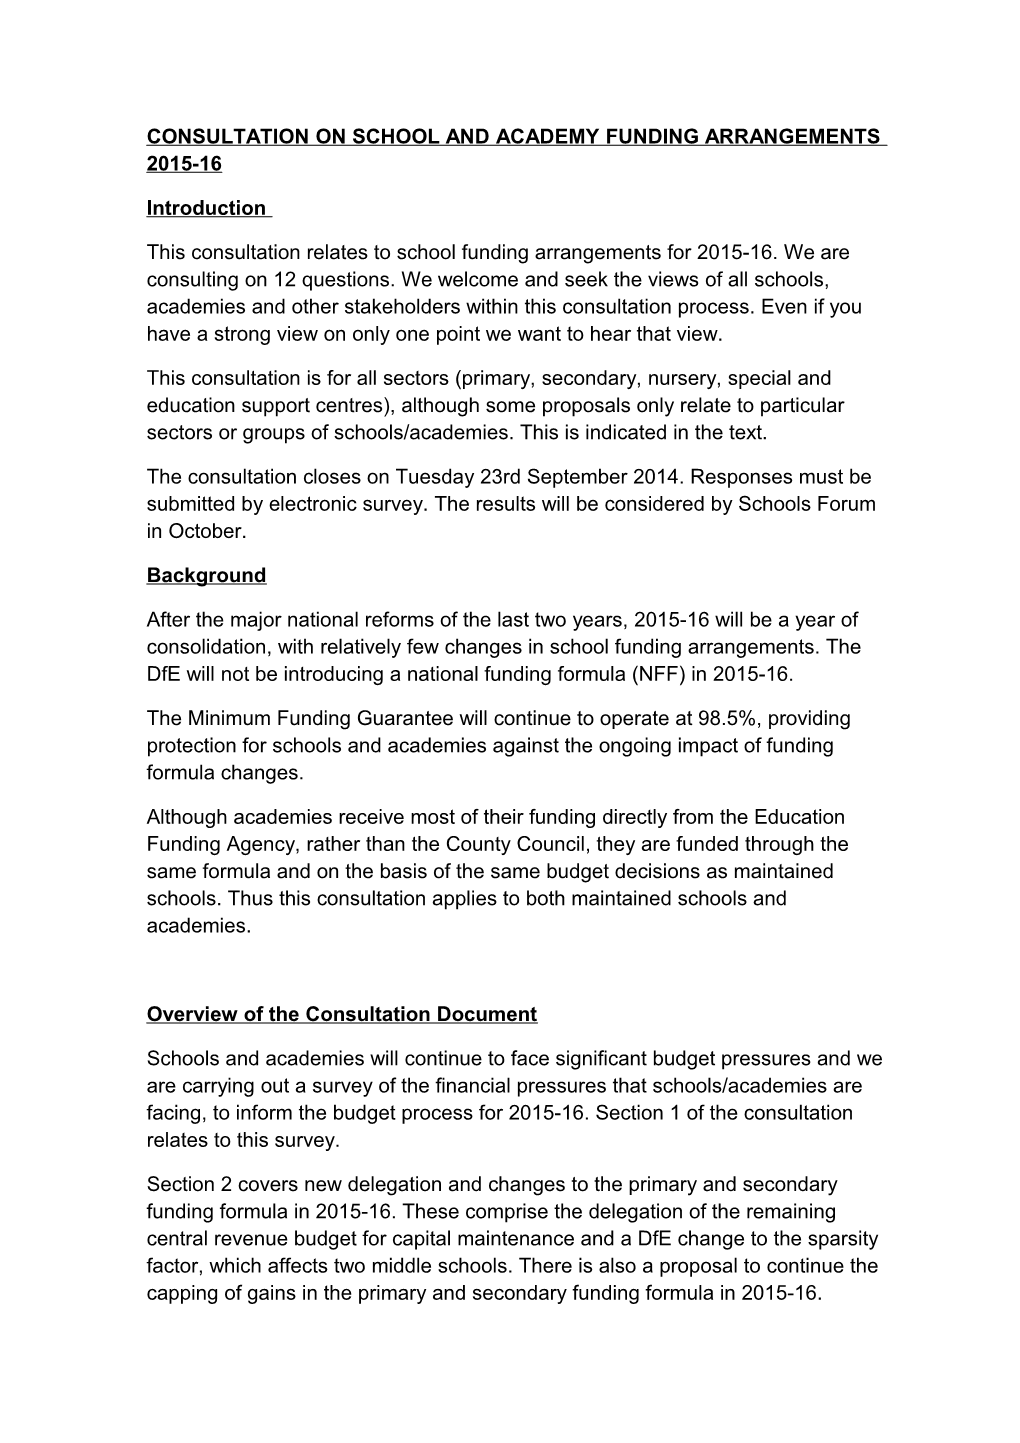 Consultation on School Funding Arrangements 2015-16